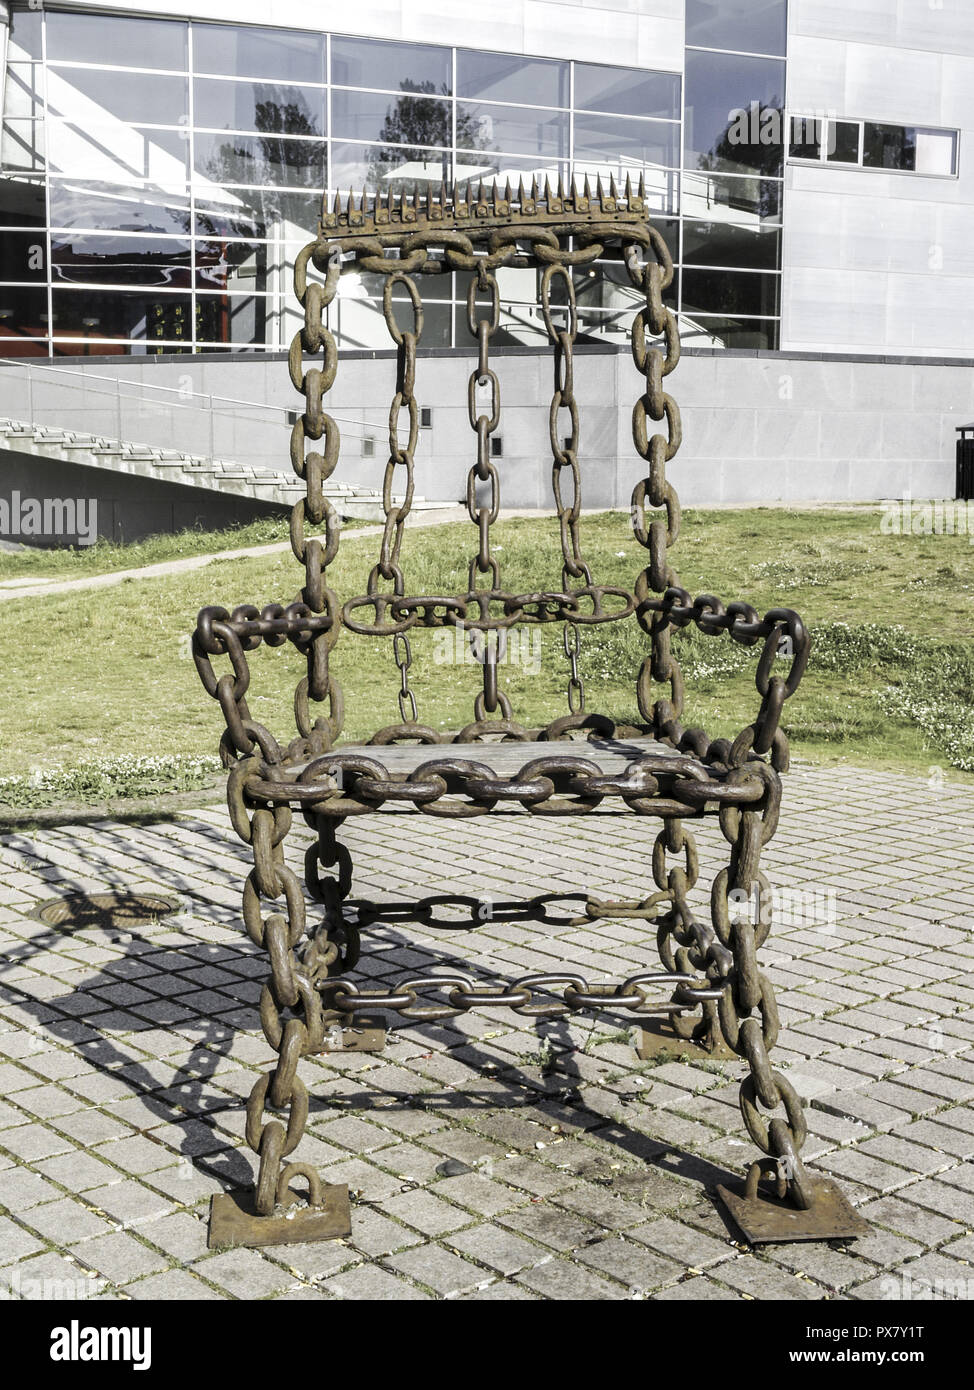 Helsinki, Kiasma museum, chair made of chains Stock Photo - Alamy